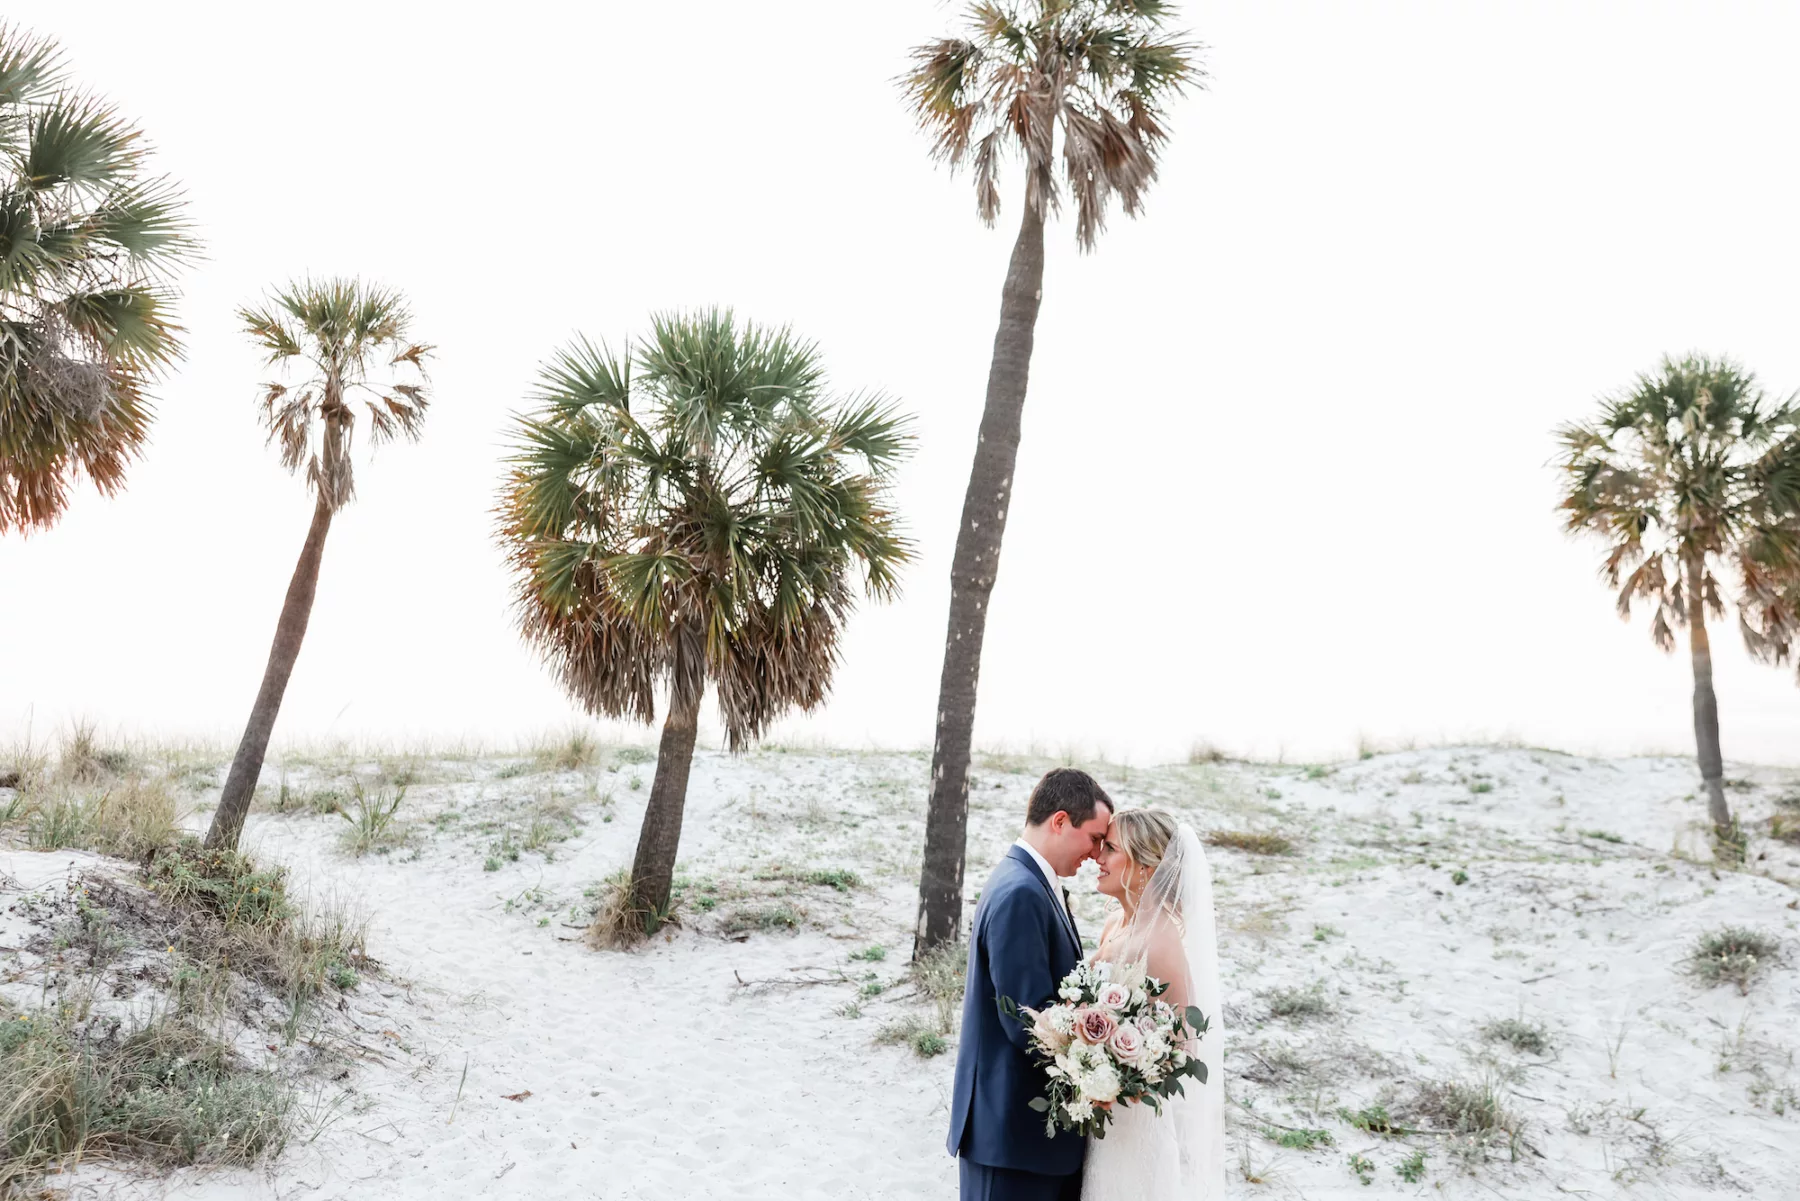 Bride and Groom Beach Wedding Portrait | Tampa Bay Photographer Lifelong Photography Studio | Venue Hyatt Regency Clearwater Beach